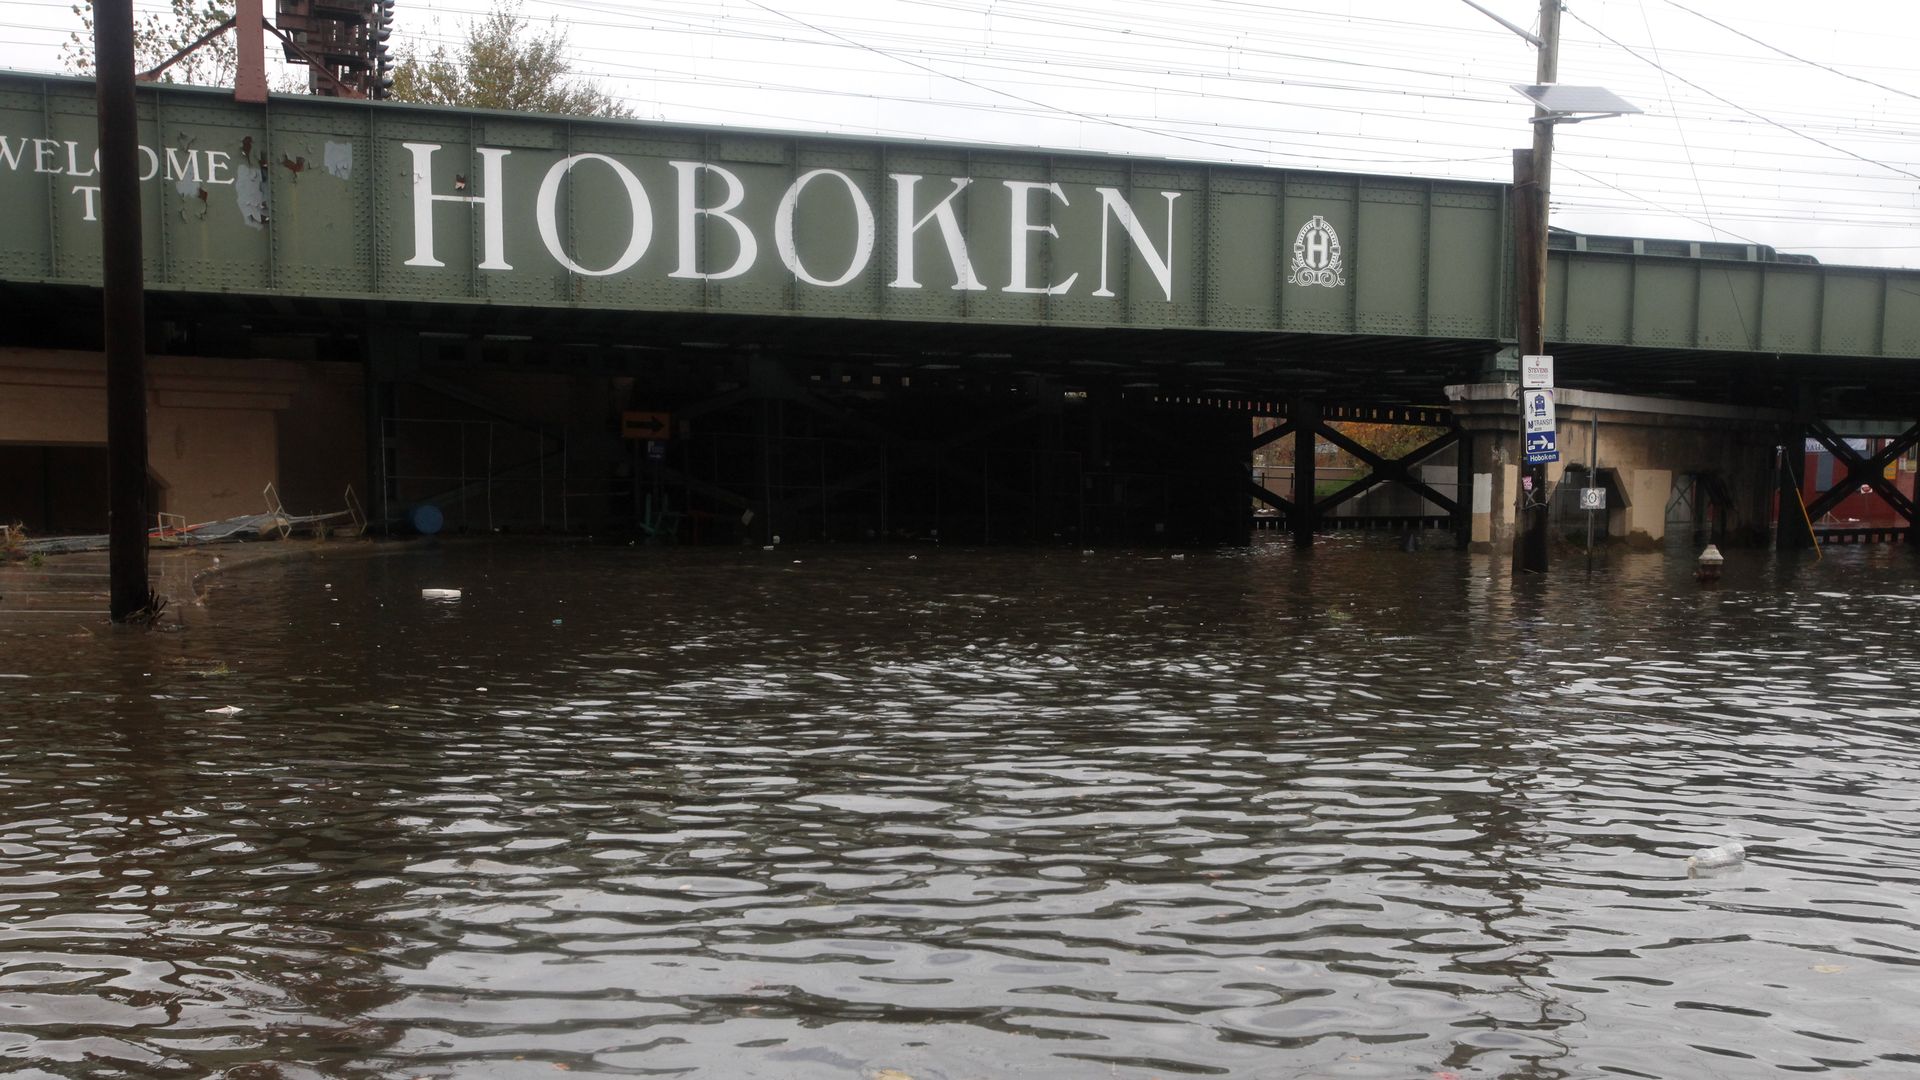 Hoboken flooding